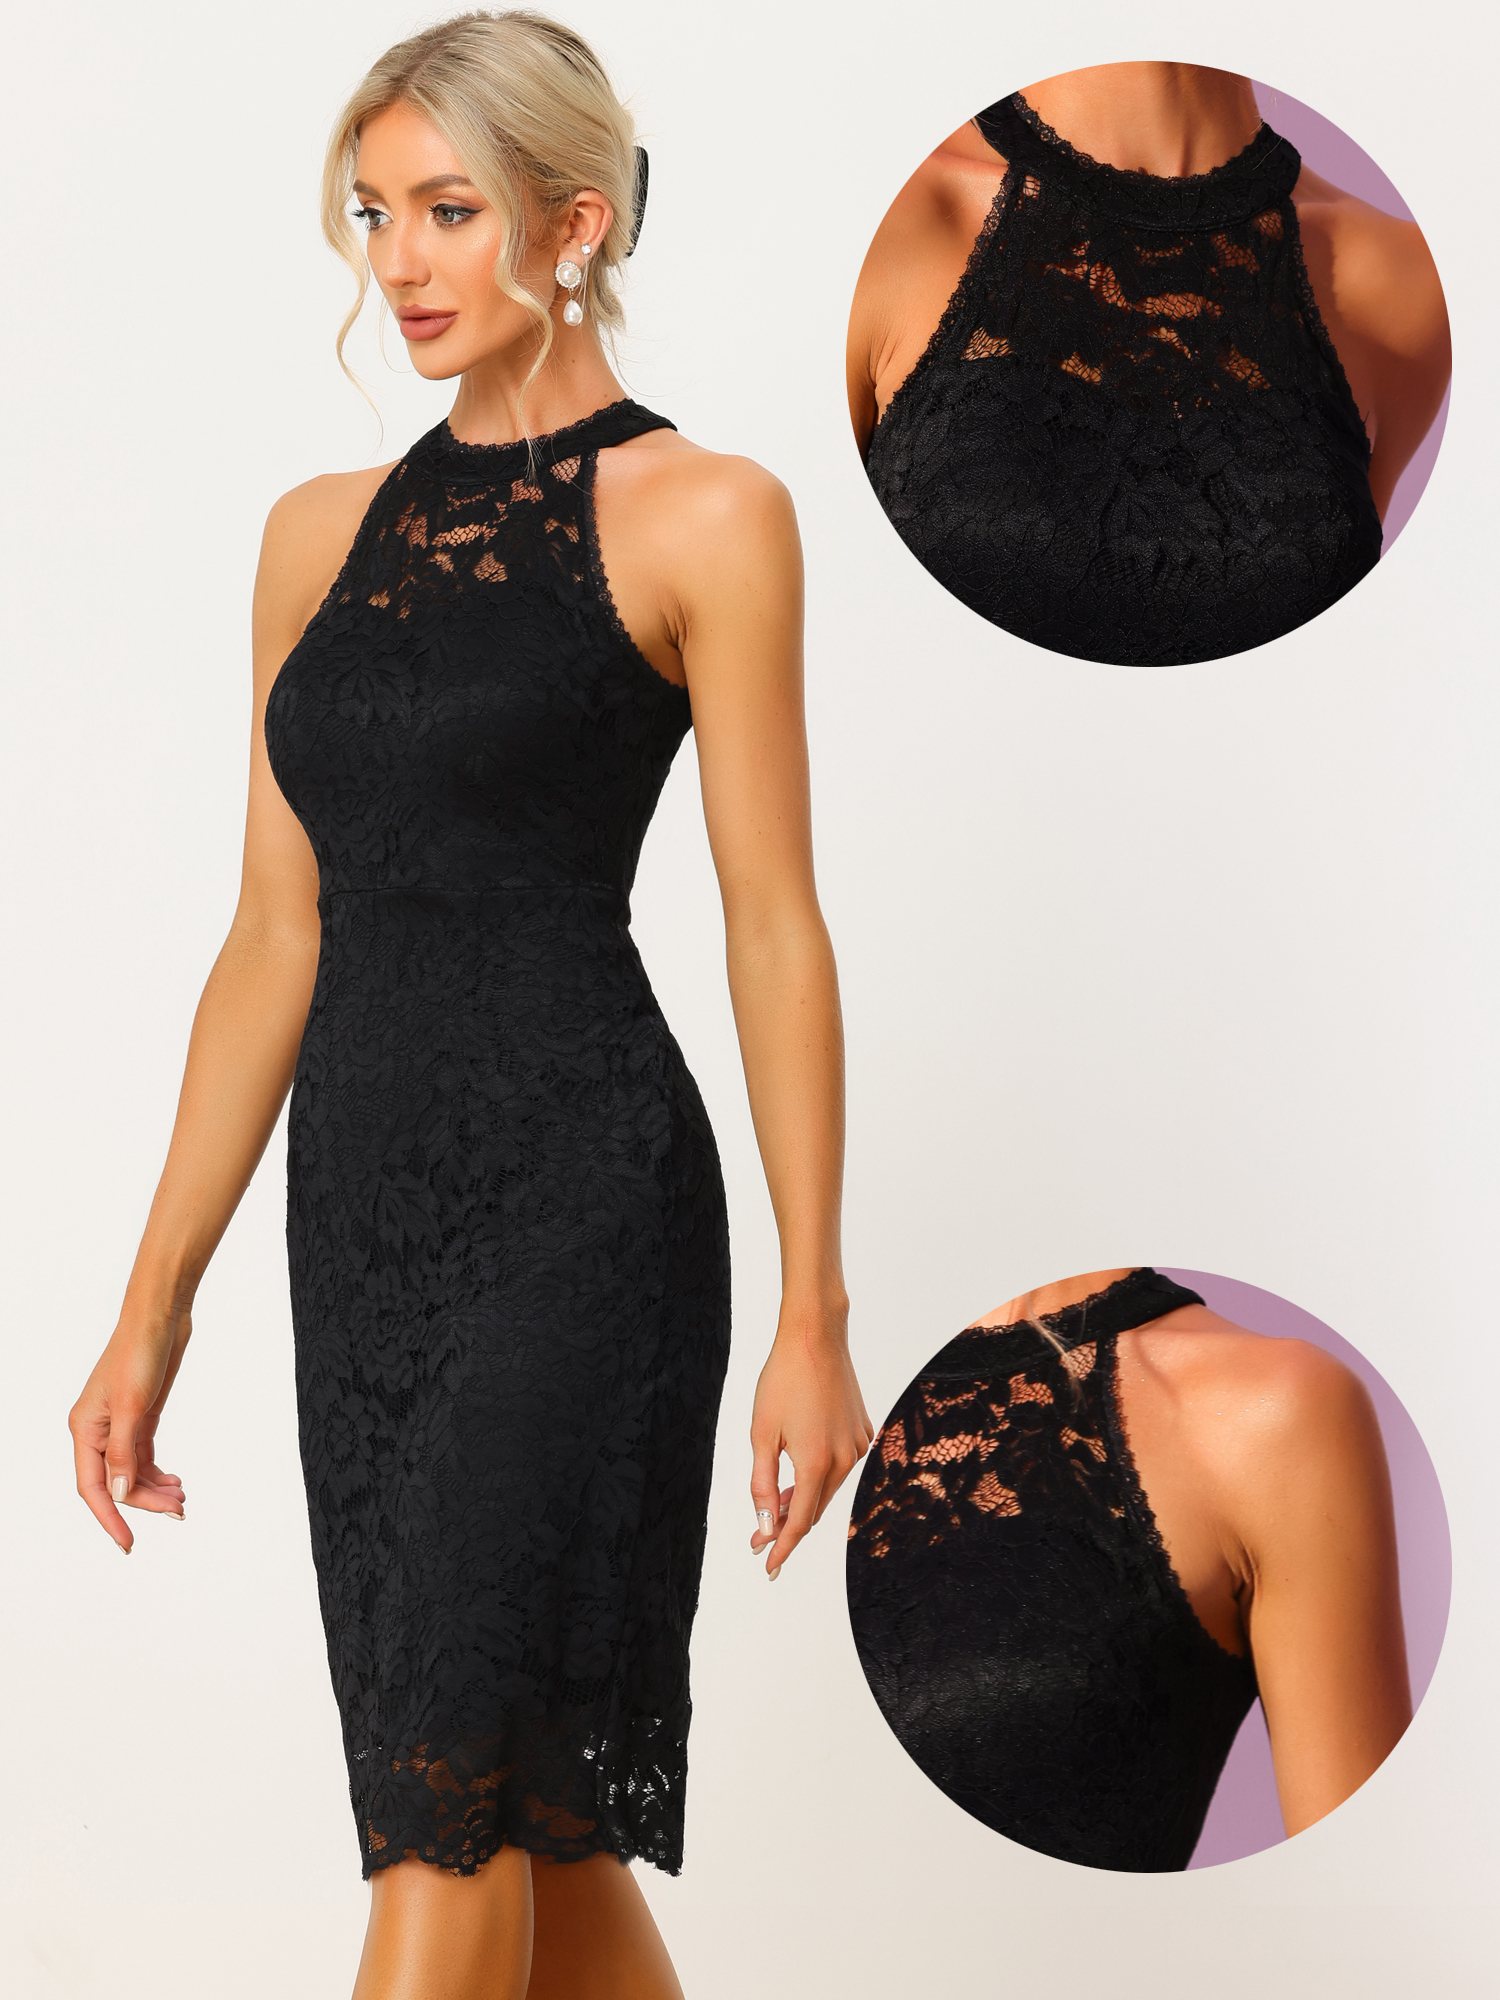 Unique Bargains Elegant Lace Dress for Women’s Halter Neck Sleeveless Bodycon Cocktail Sheath Dress